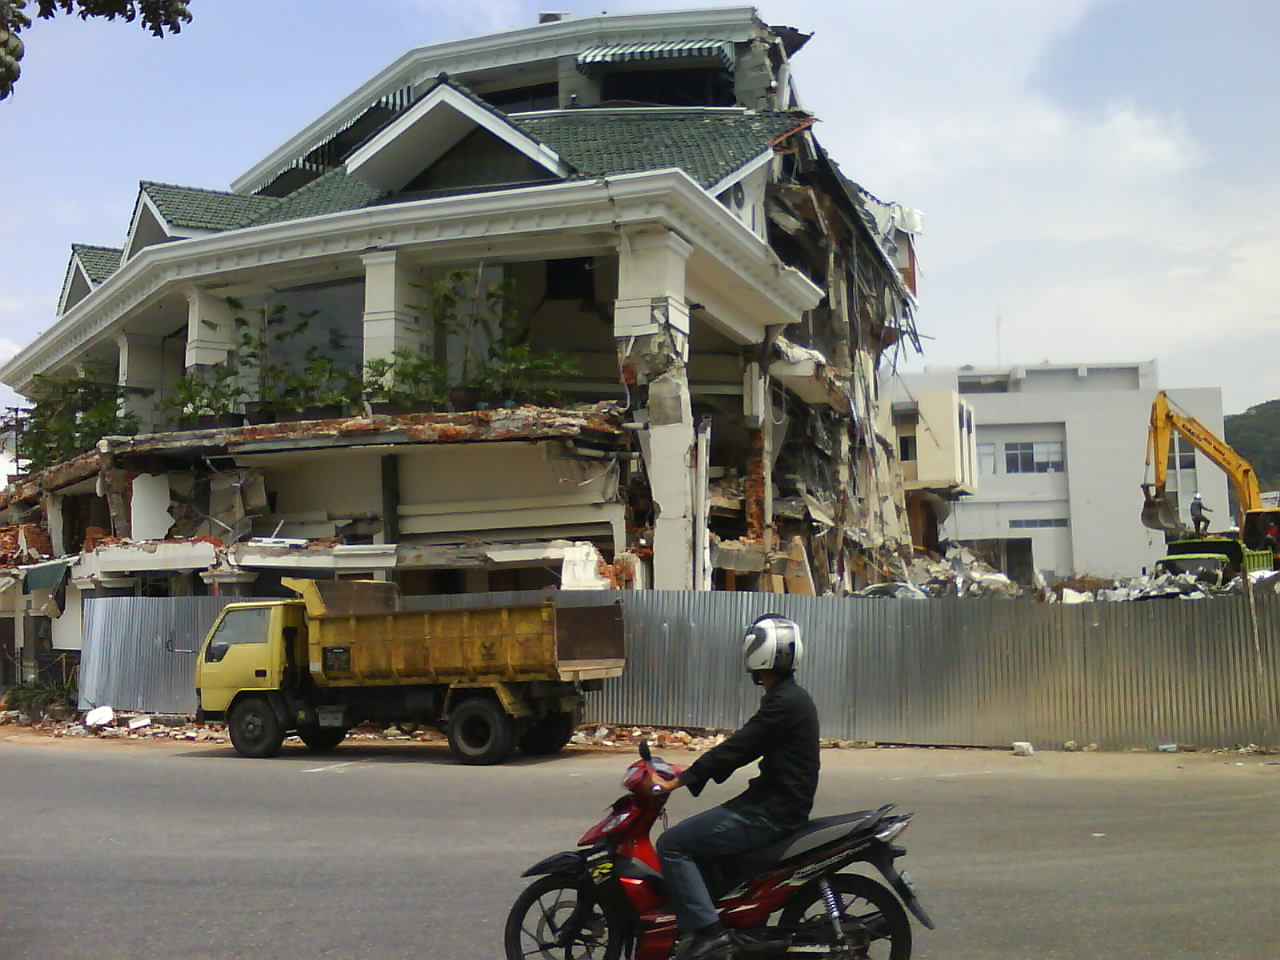 The Breakup of Ambacang Hotel On 2009 Earthquake in Padang